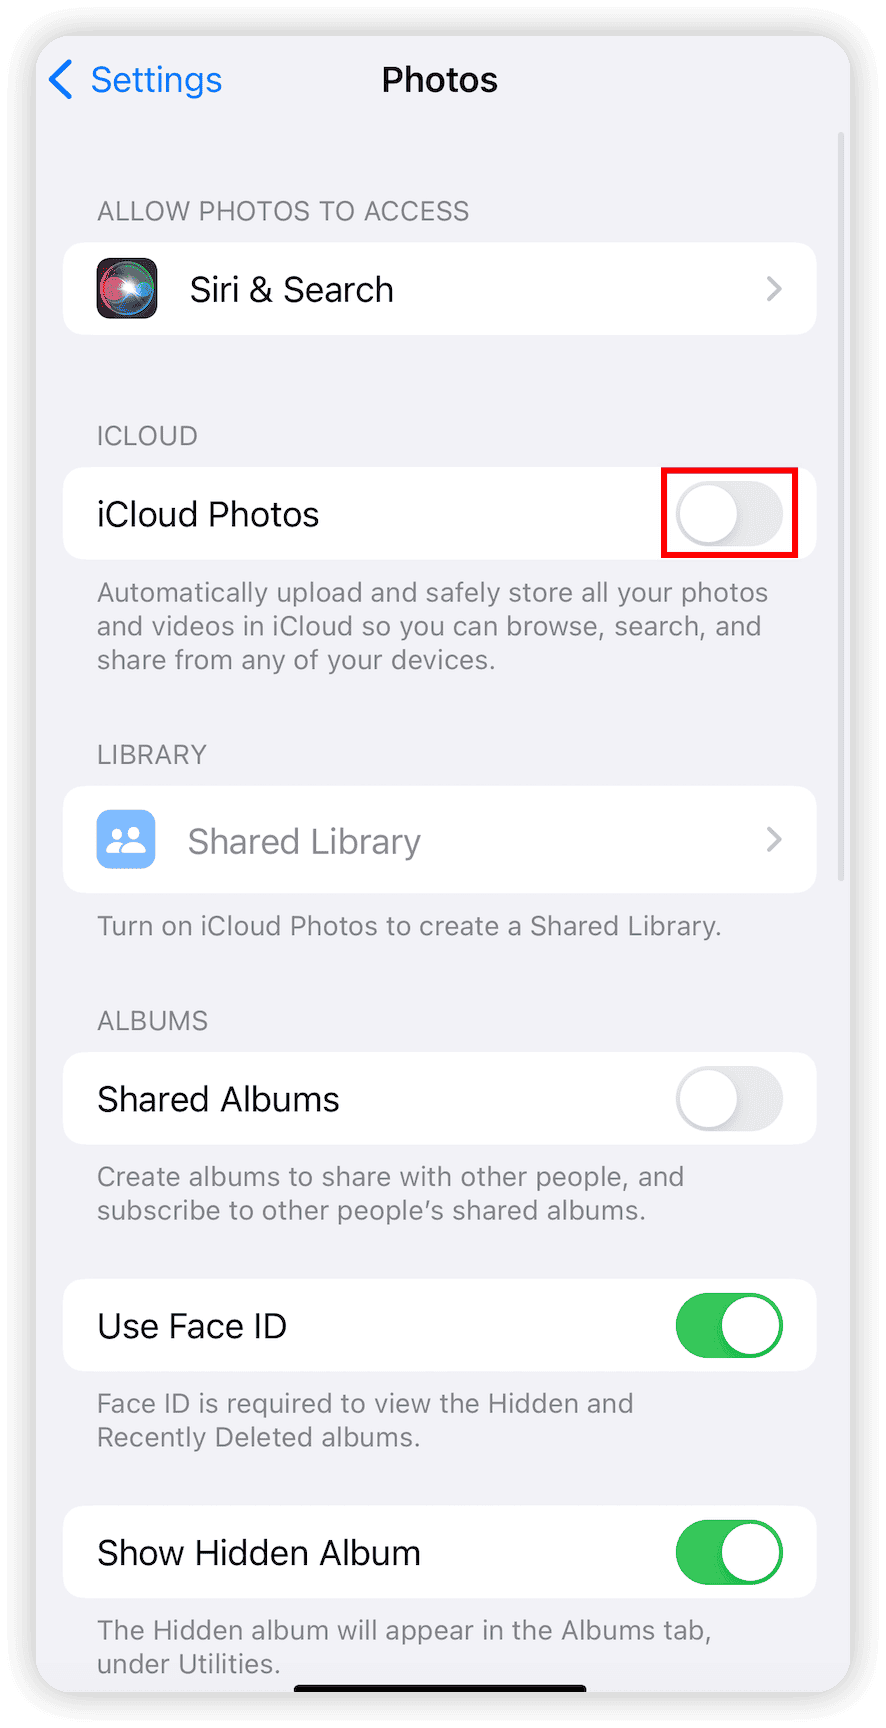 Turn off iCloud Photos